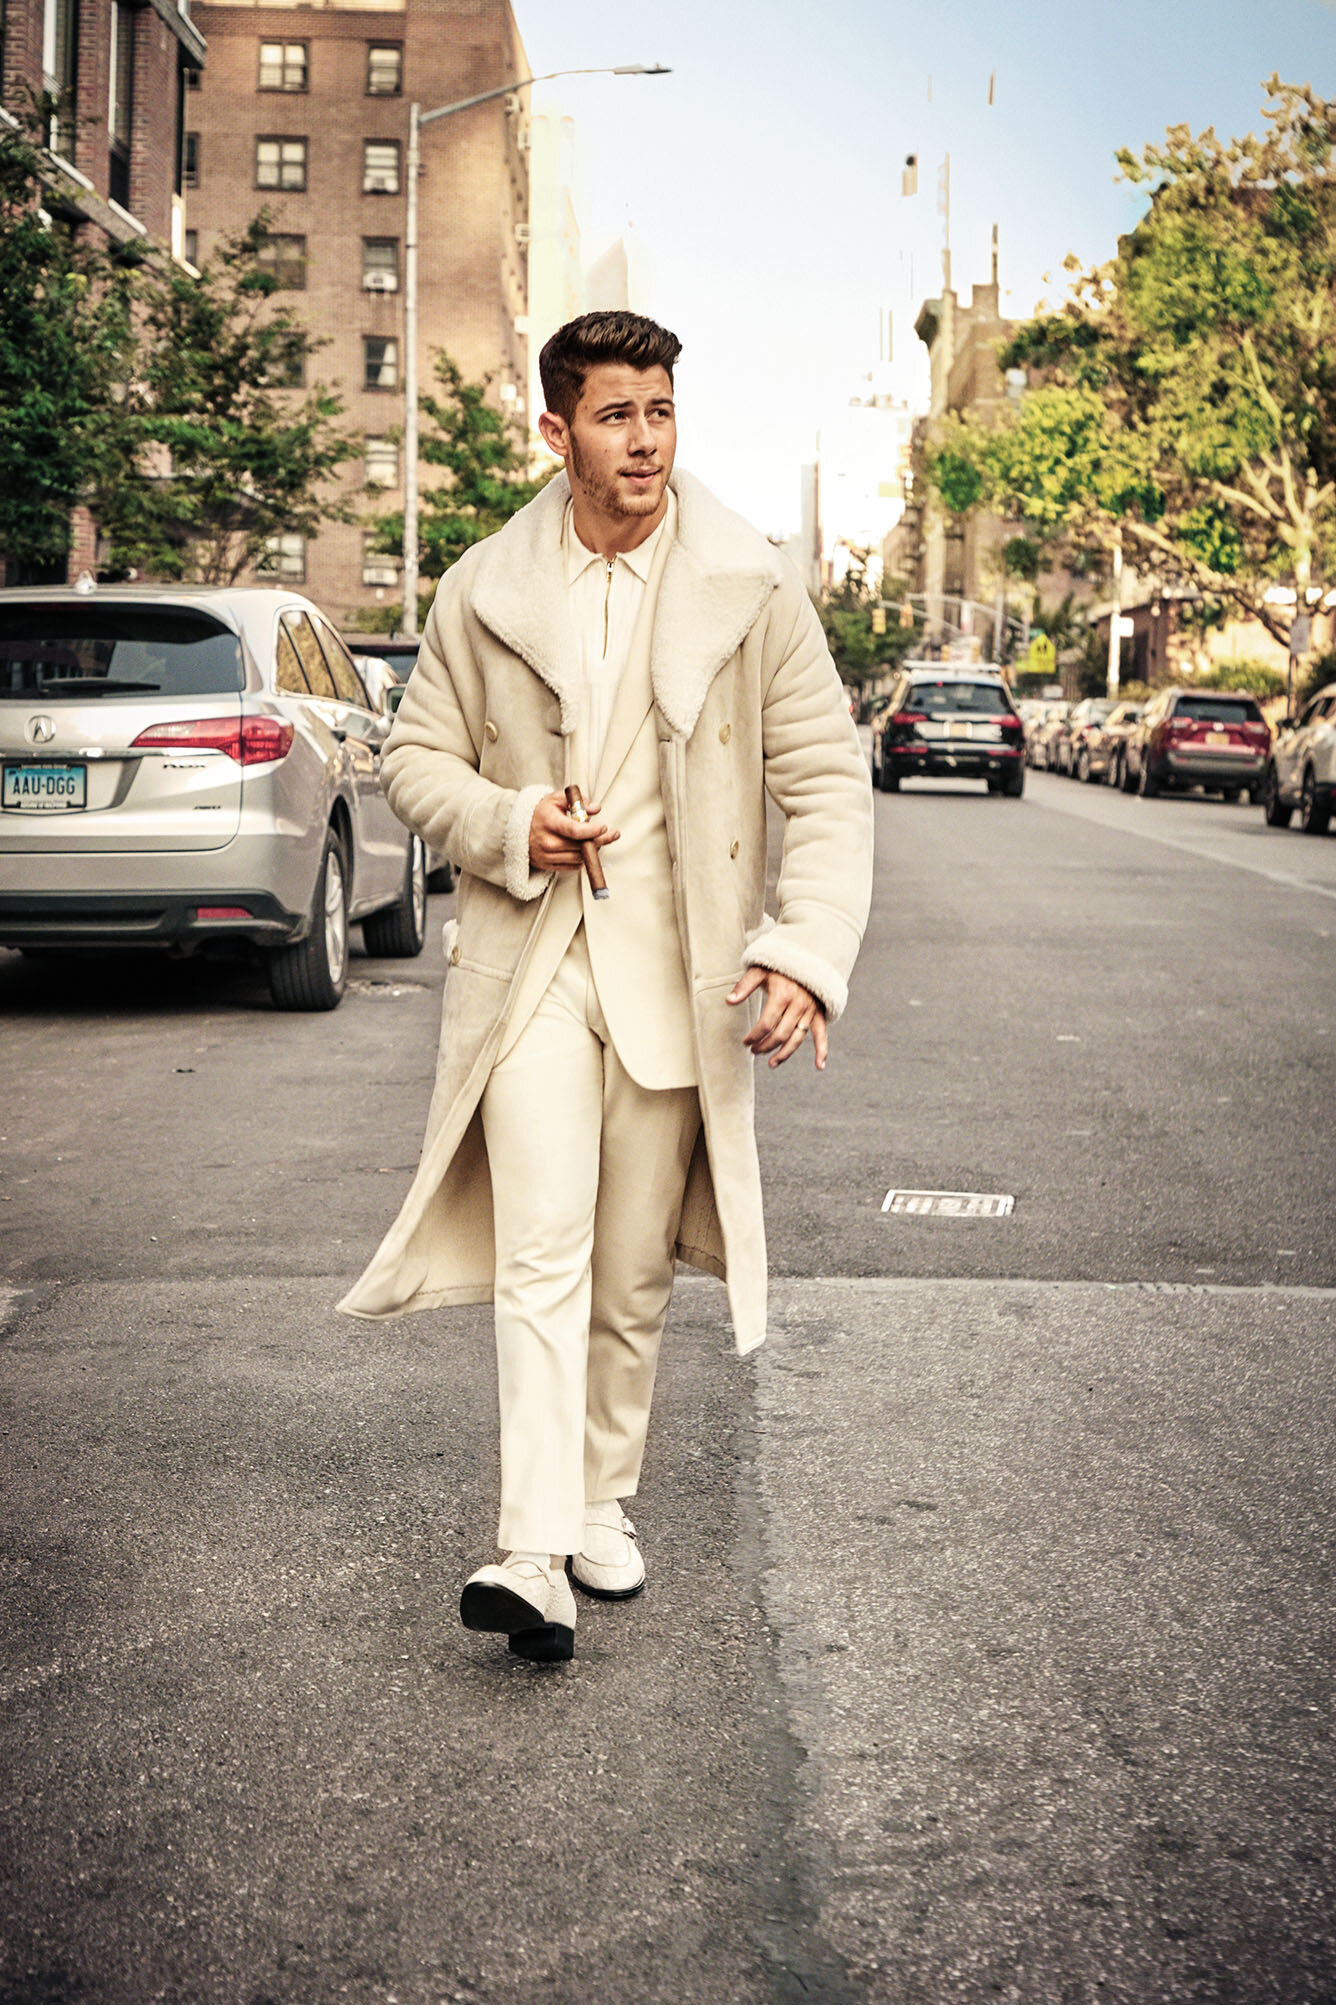  Nick Jonas for  Cigar Aficionado . Photo: David Needleman. Styling: Avo Yermagyan / Grooming: Amy Komorowski. New York, NY.  